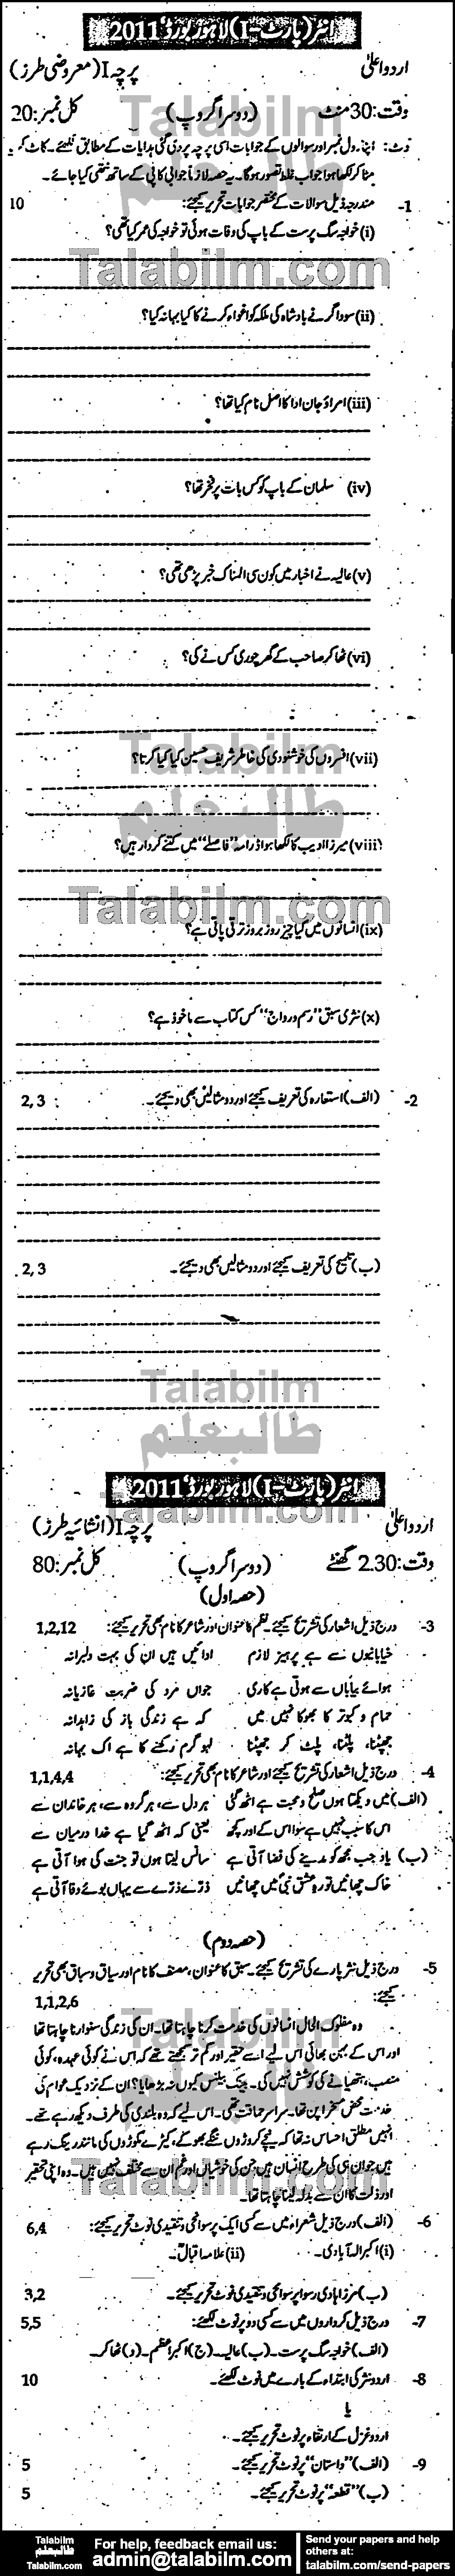 Urdu 0 past paper for Group-II 2011